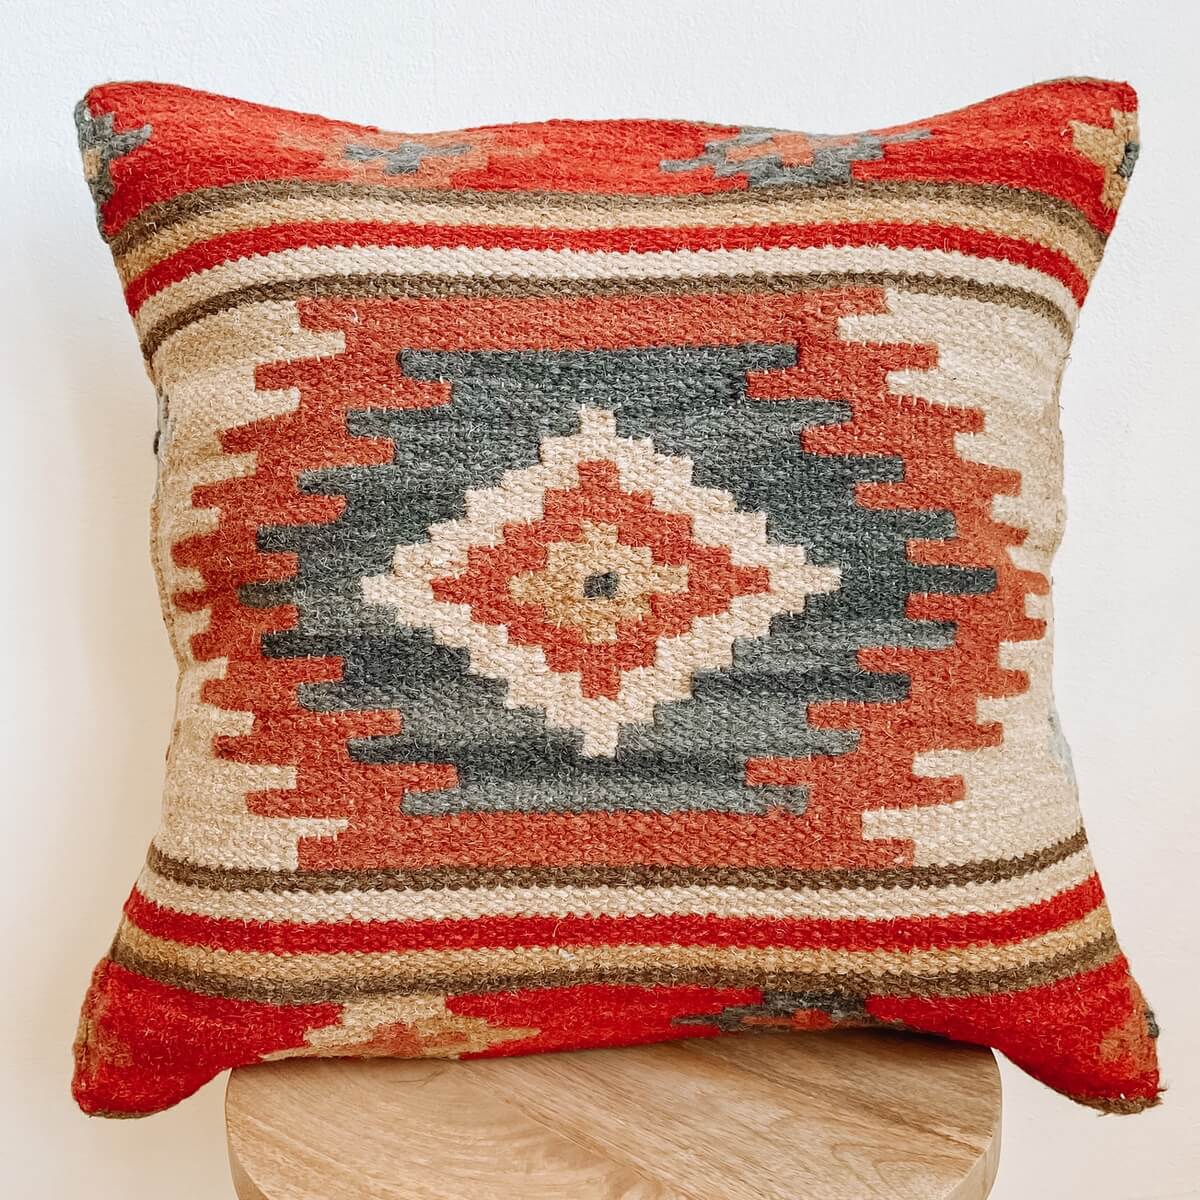 perna decorativa kashi creata manual din lana in culori spectaculoase cu model aztec, mango+bloom